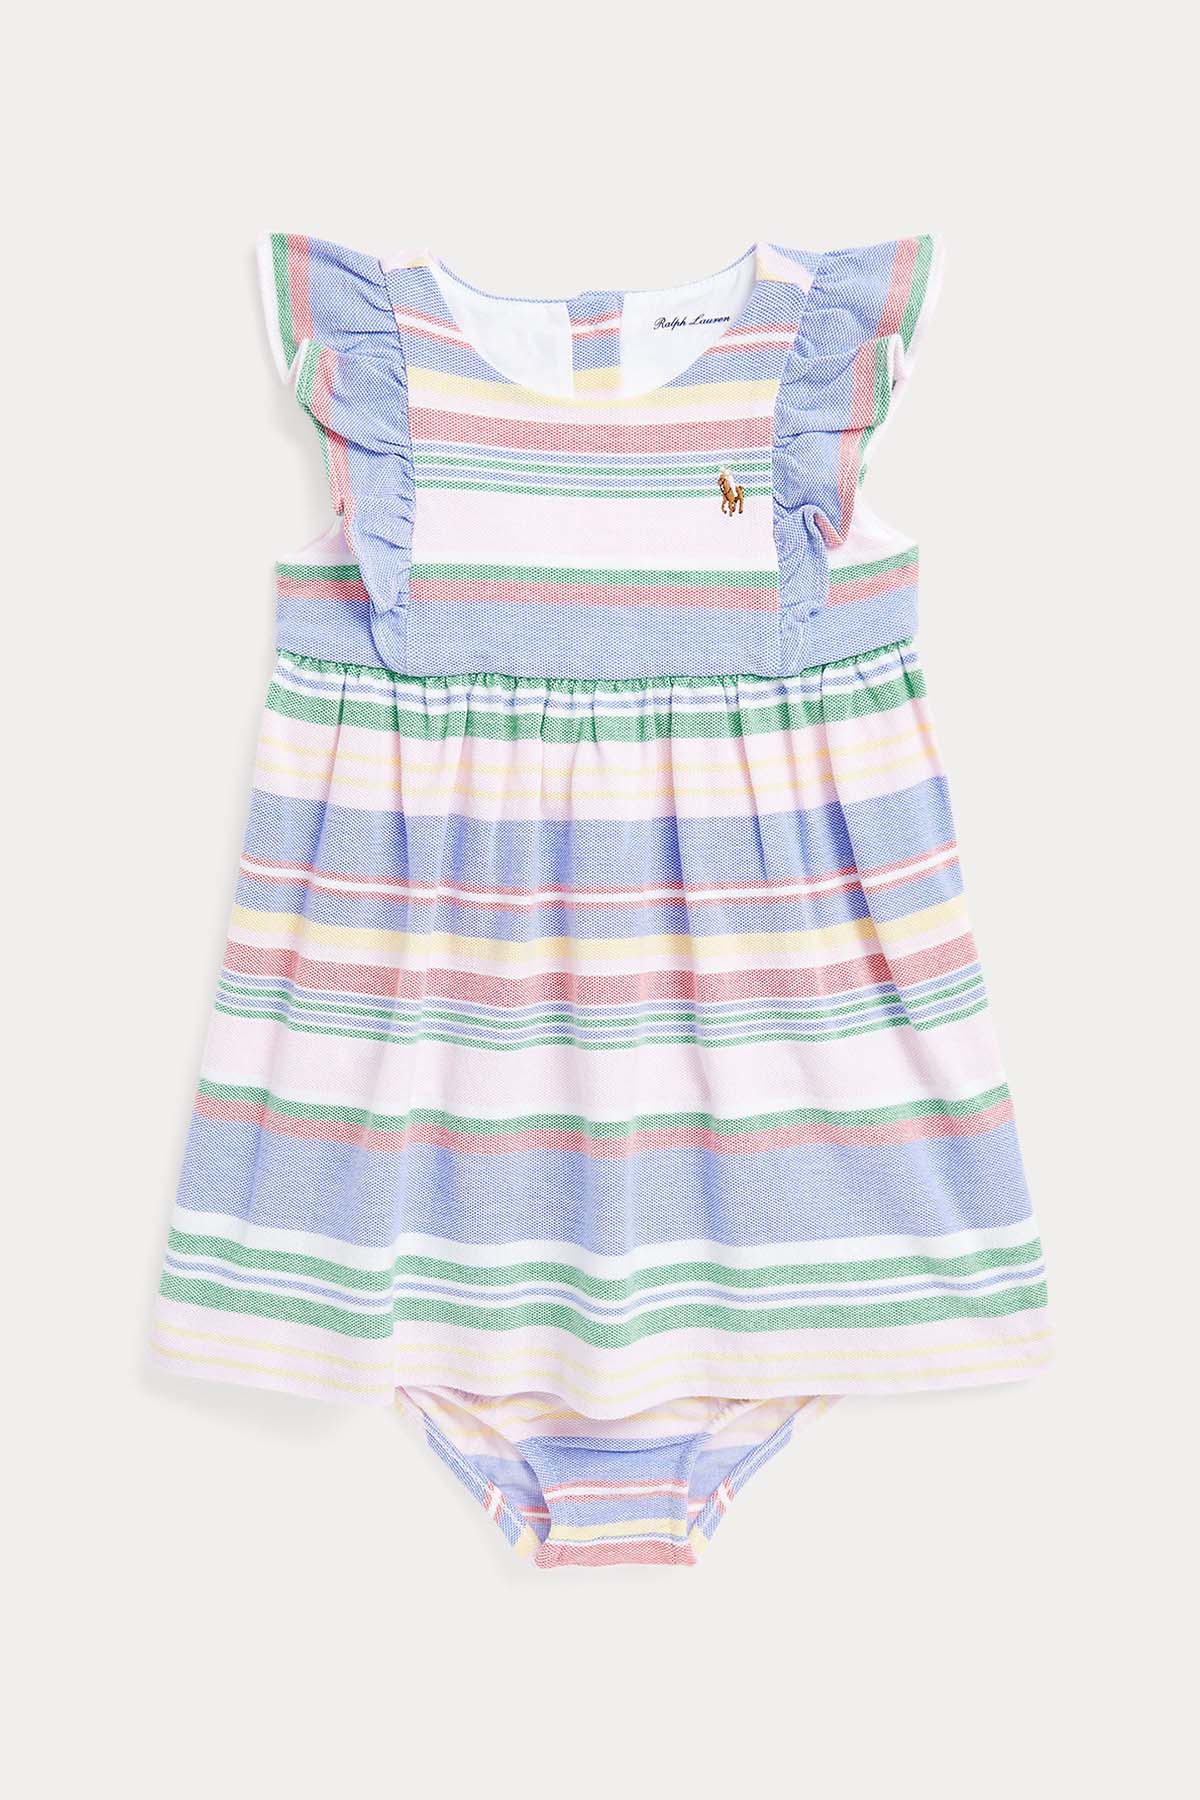 Polo Ralph Lauren Kids 12-18 Aylık Kız Bebek Elbise